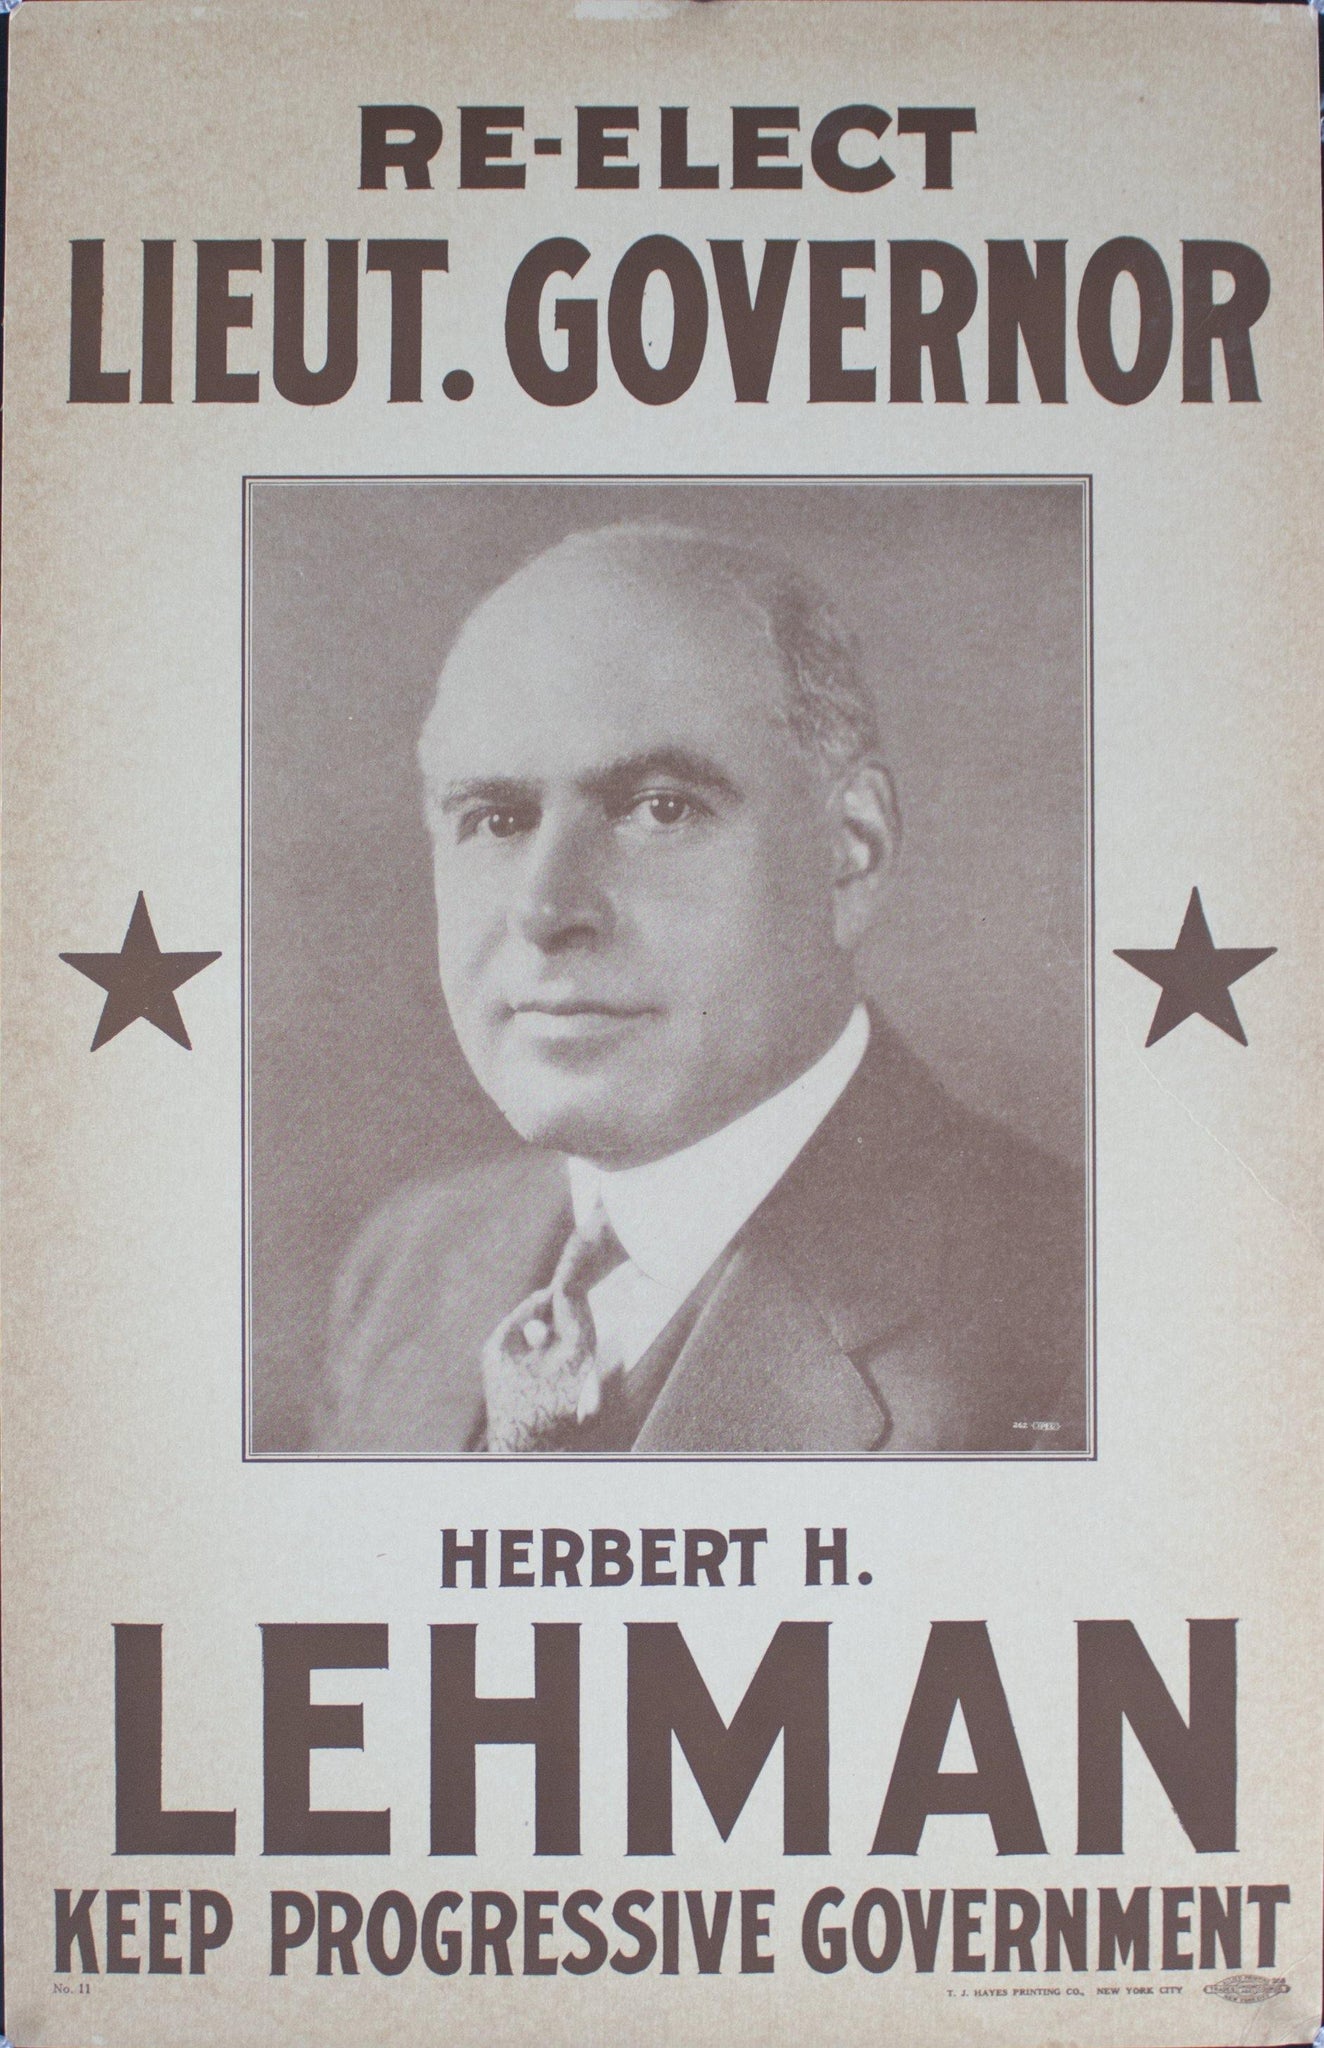 1928 Re-elect Lieut. Governor Herbert H. Lehman | Keep Progressive Government - Golden Age Posters